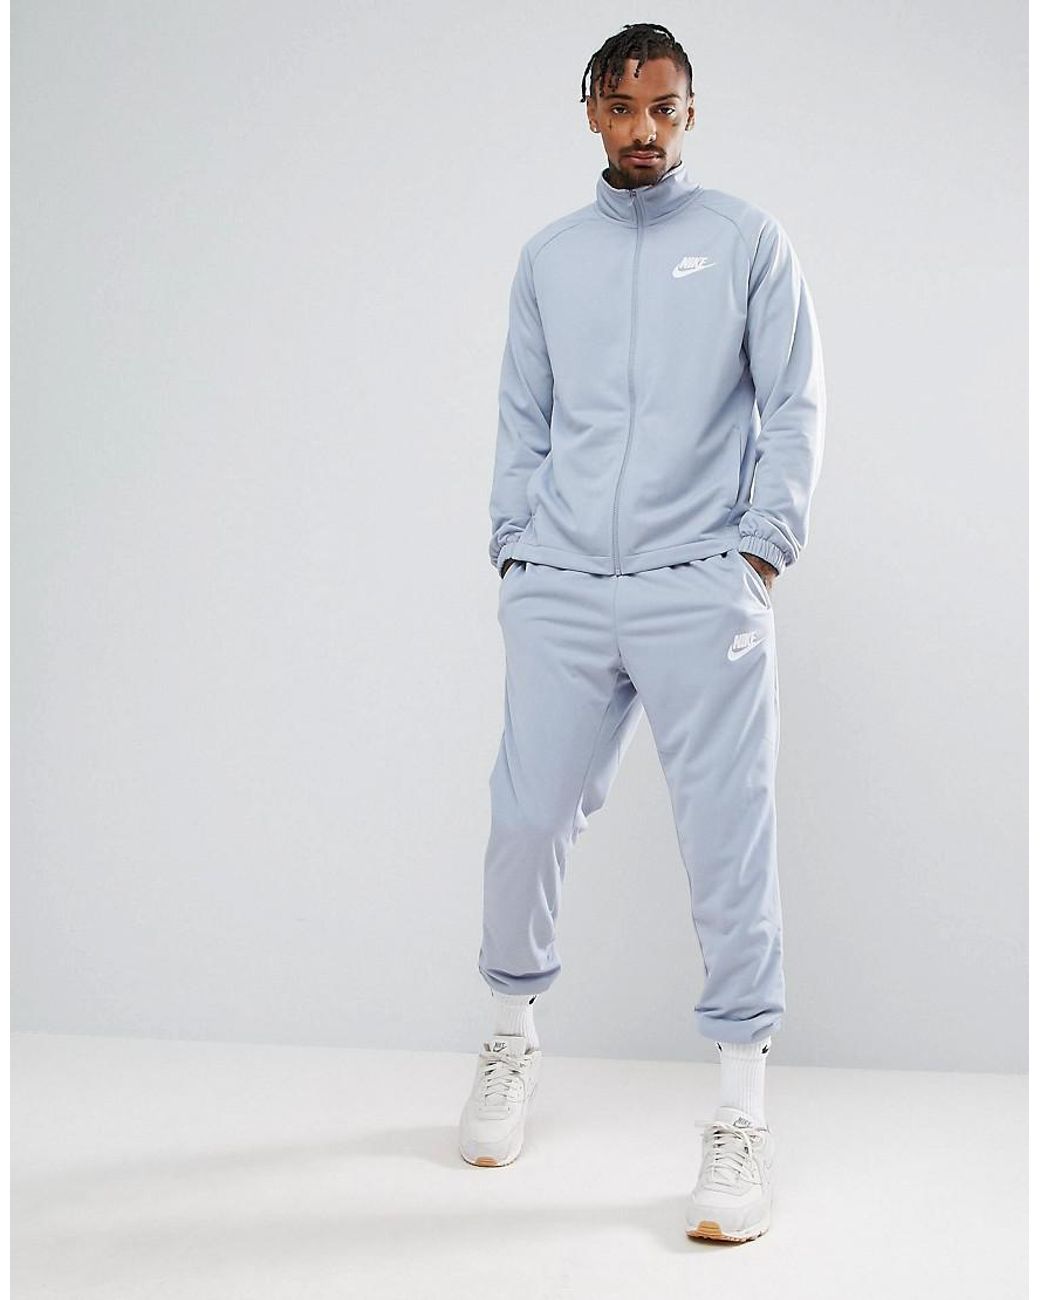 Mens Nike Full Tracksuit Set Fleece Repeat Logo Hoodie Joggers Khaki Brown  Beige | eBay